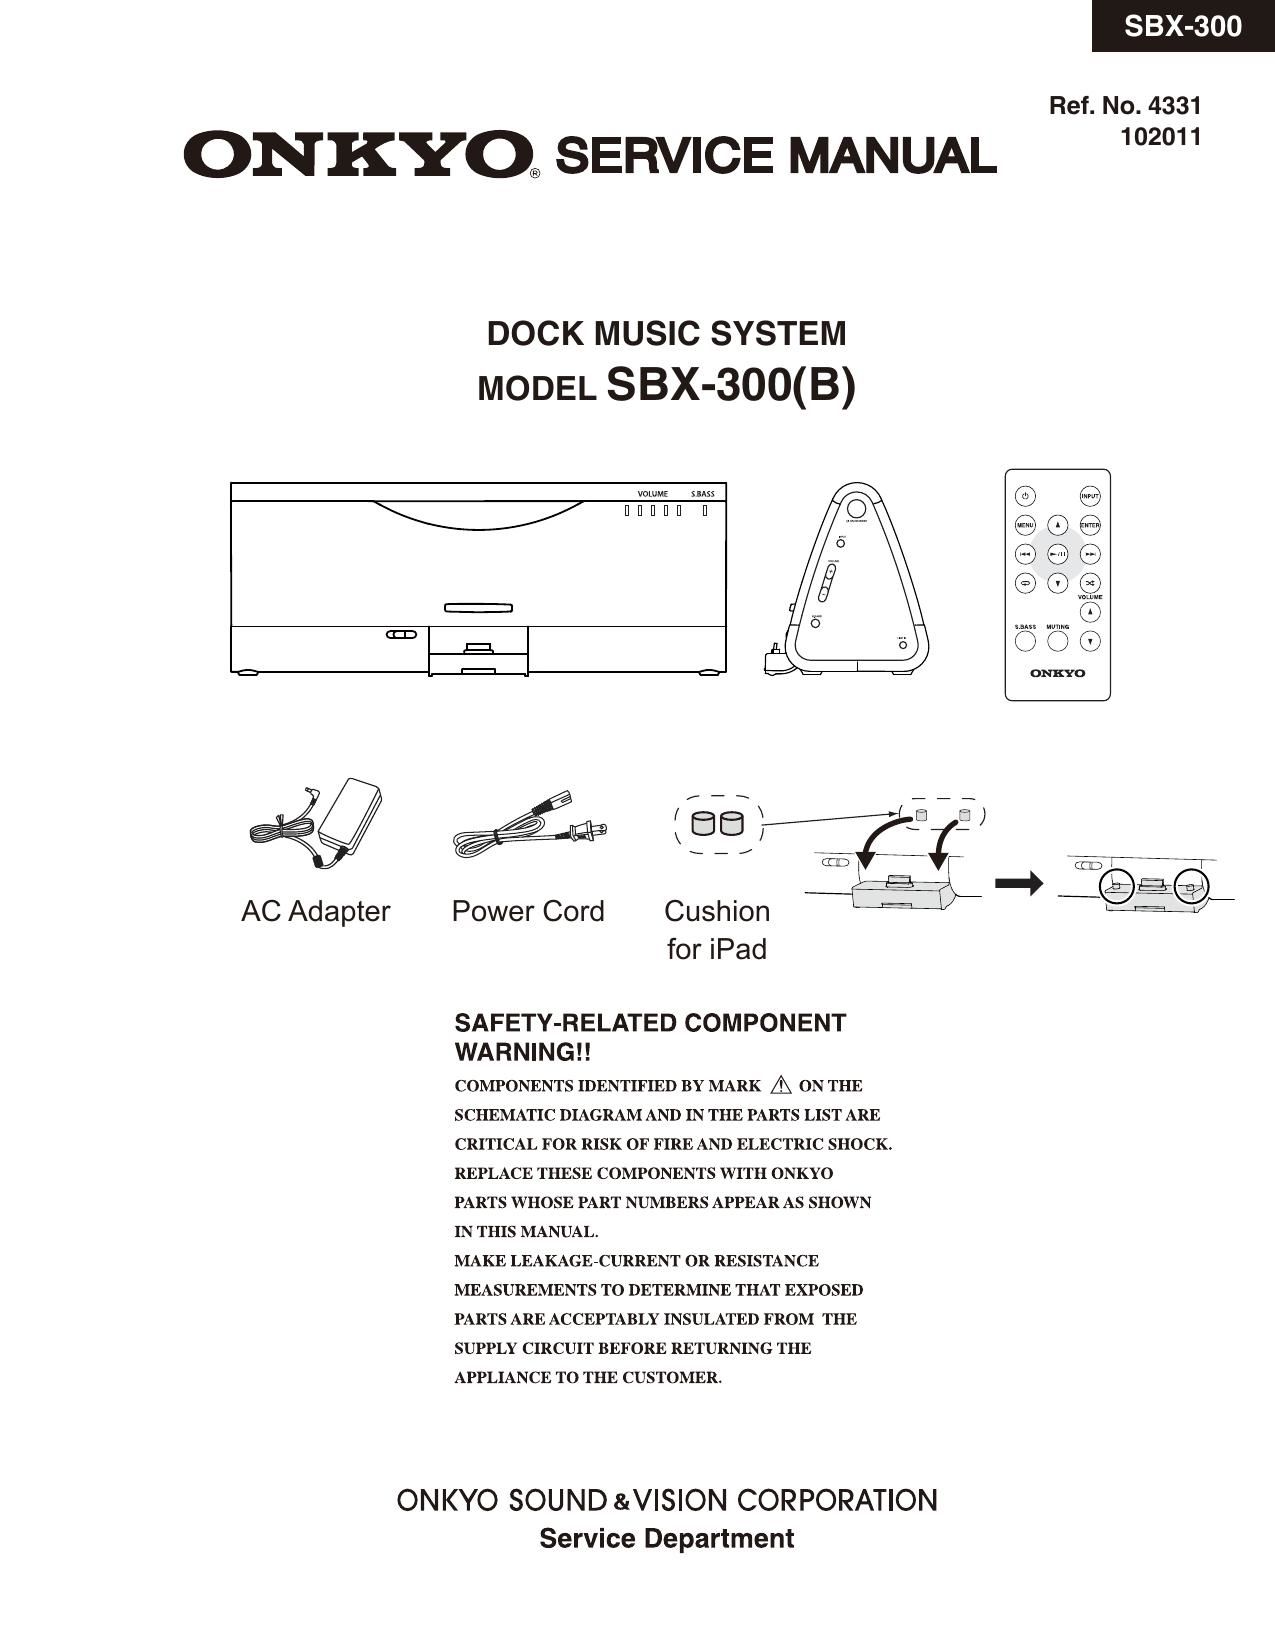 Onkyo SBX 300 B Service Manual